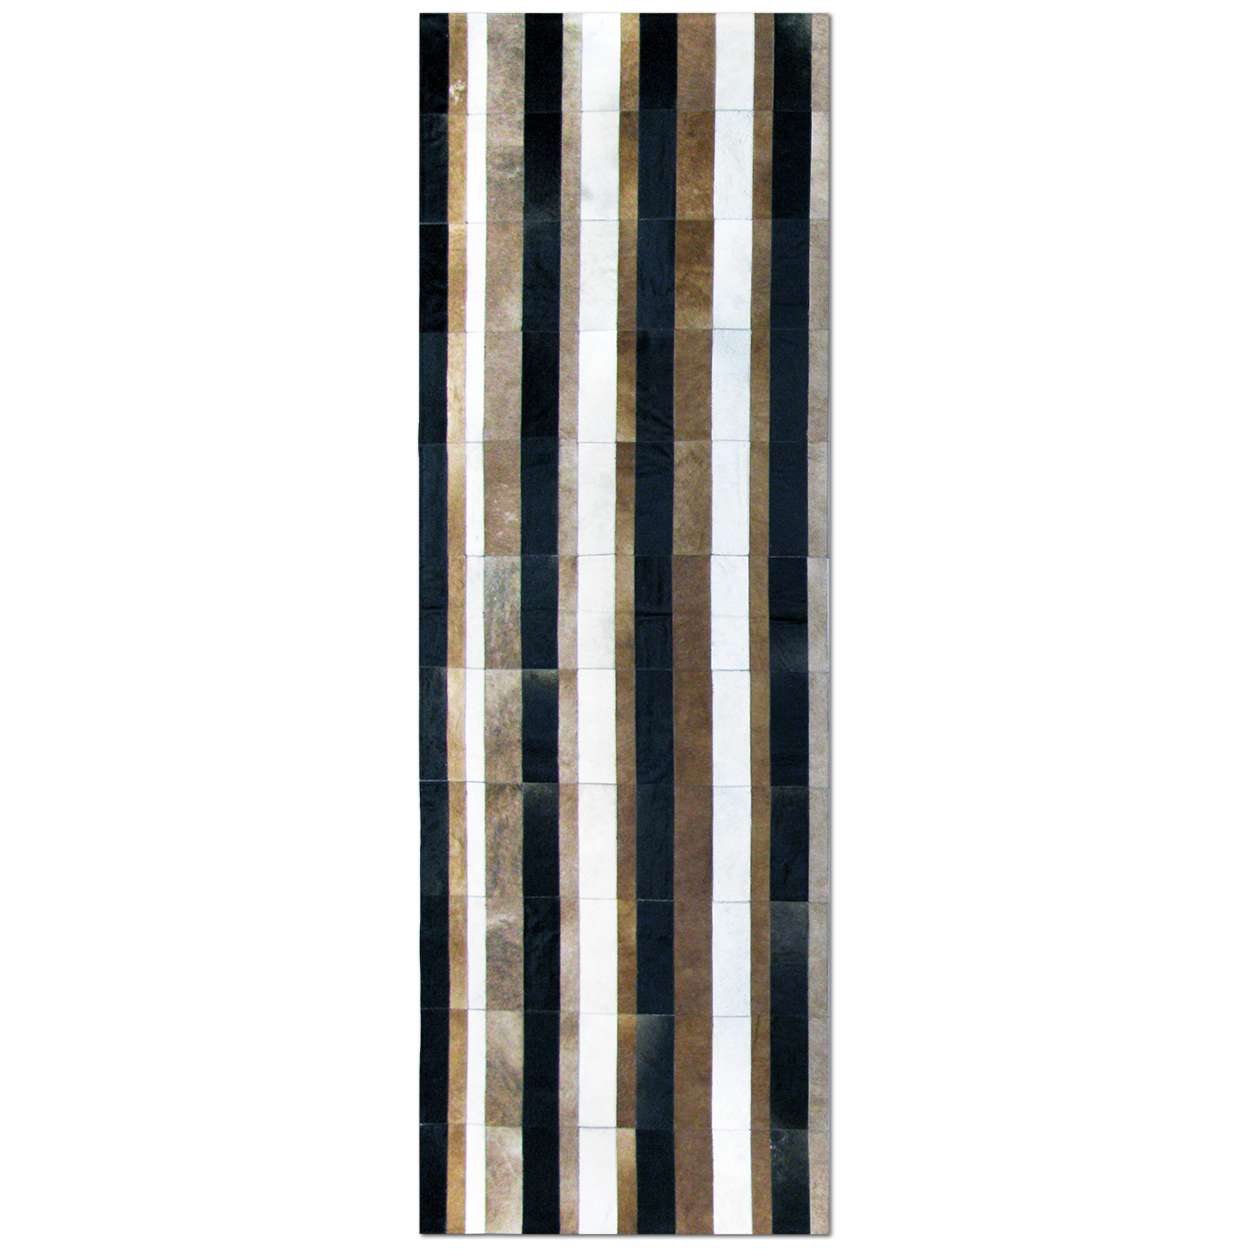 Custom Cowhide Patchwork Runner - Vertical Stripes Black, Brown, and Gray